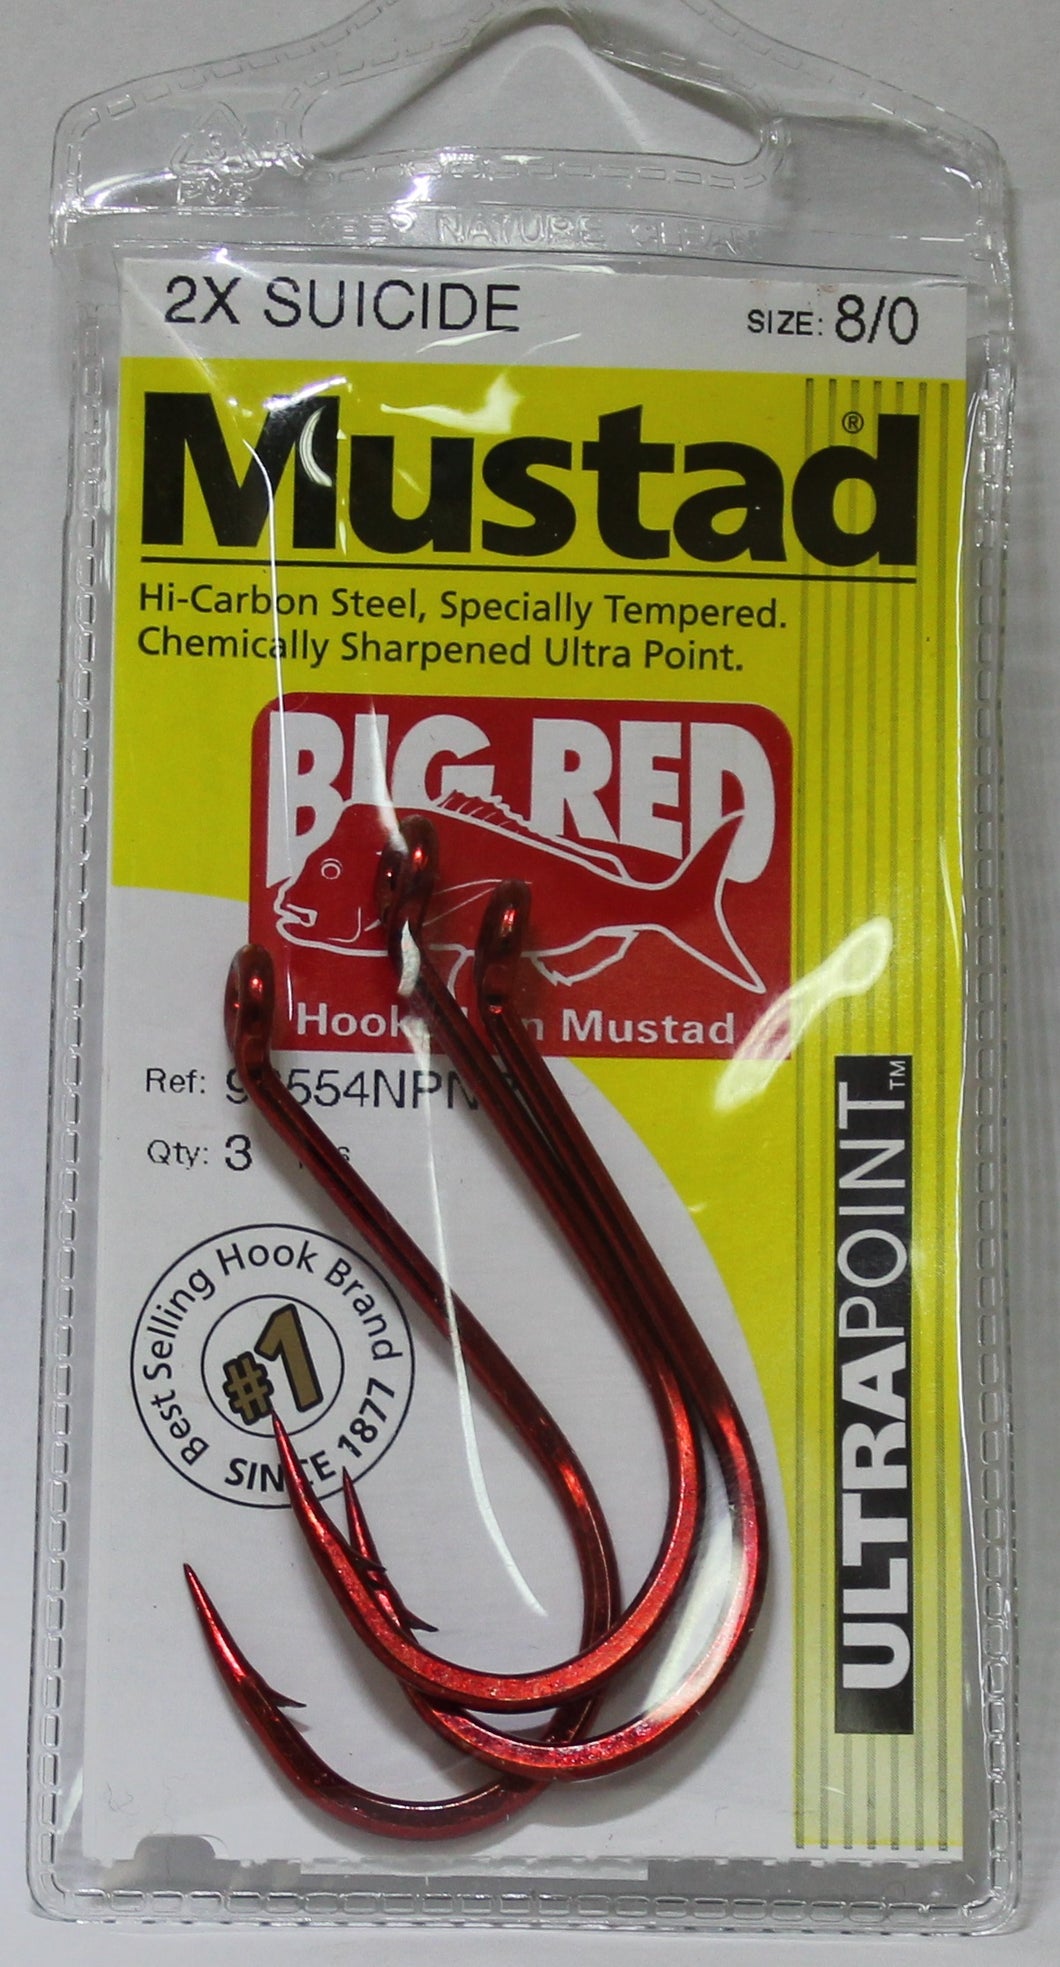 Mustad Big Red Suicide Hooks 3 / 0 8 Pack